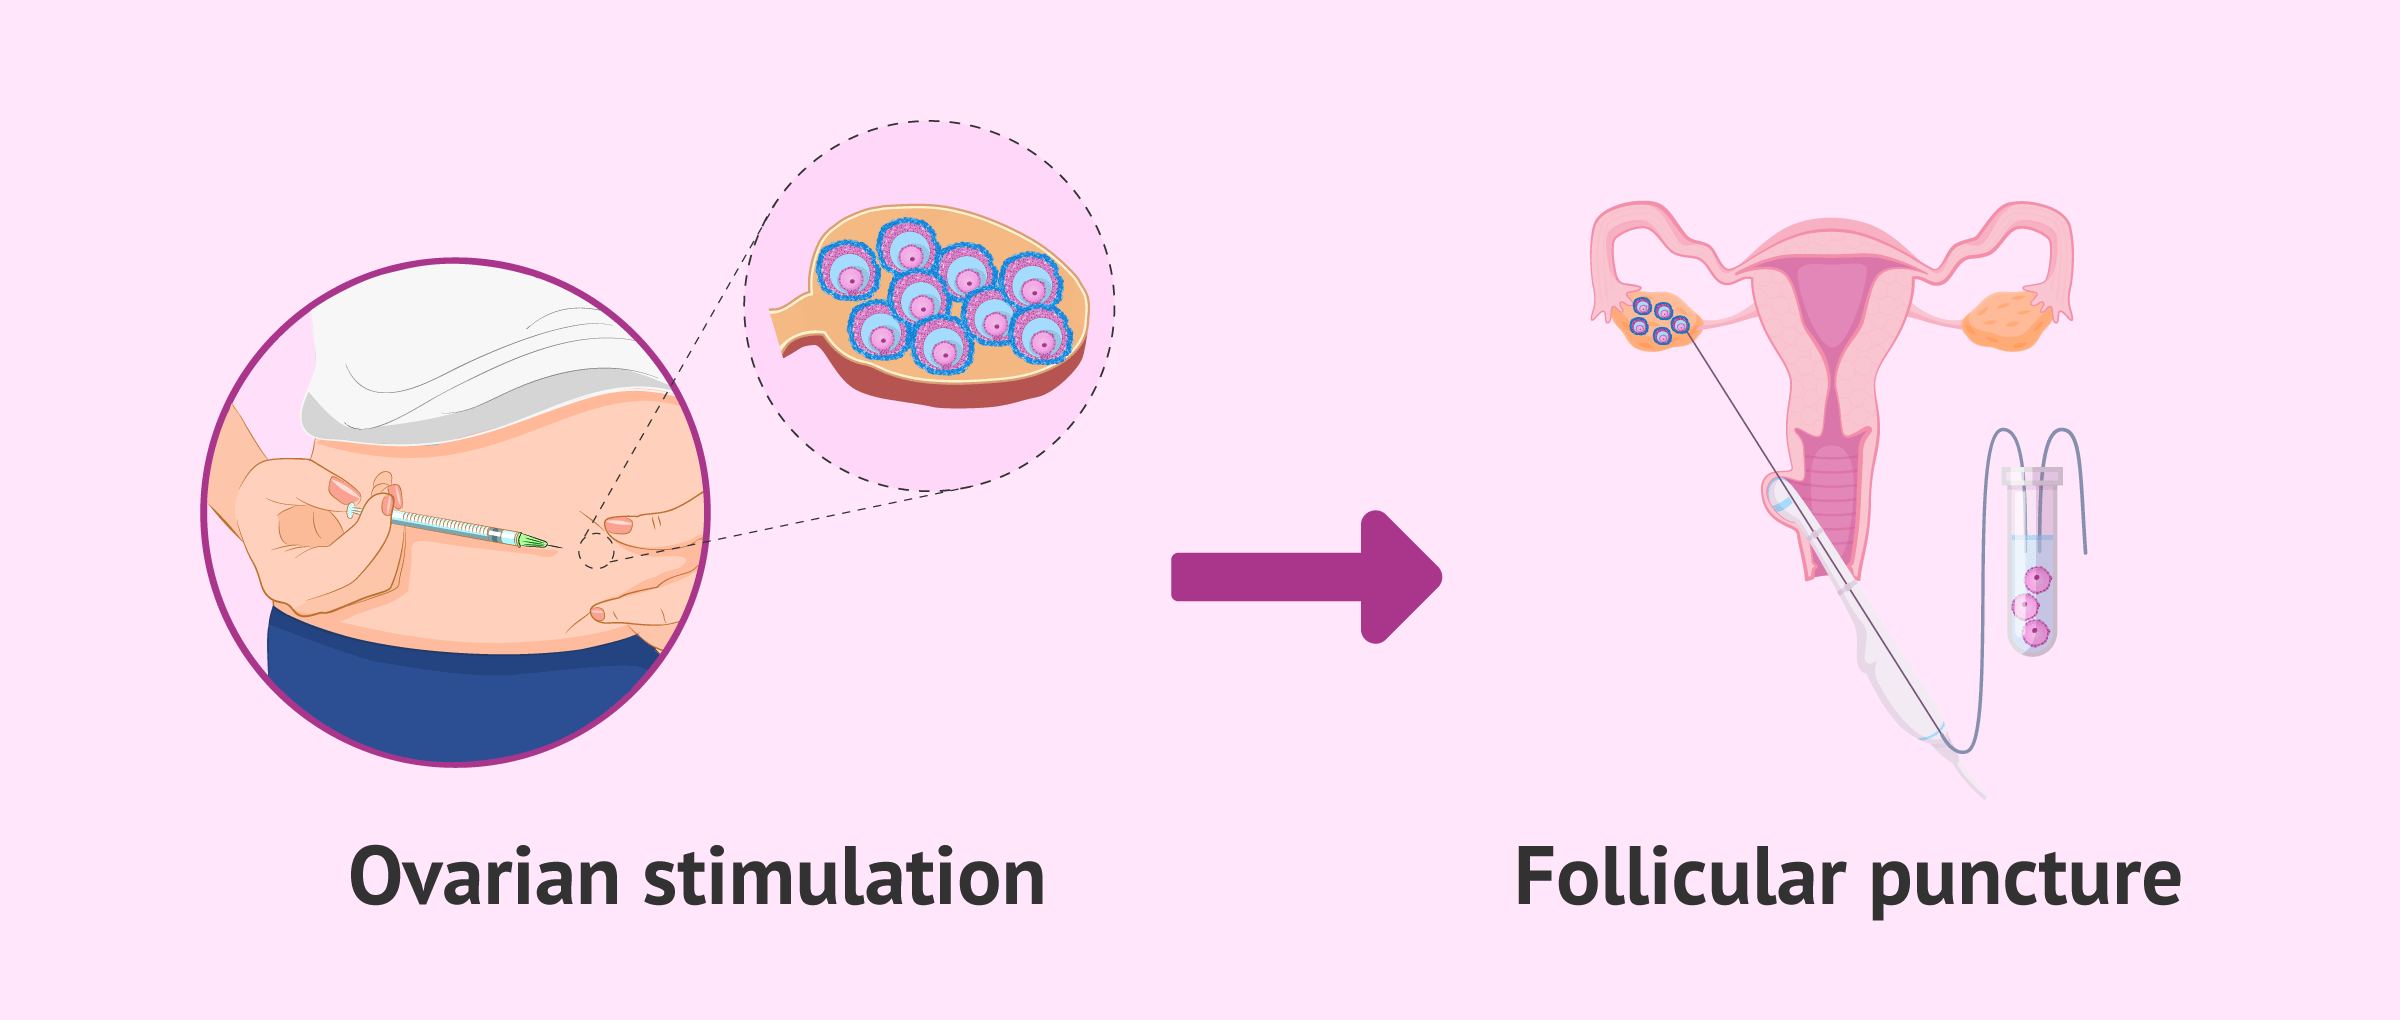 Follicular puncture after ovarian stimulation